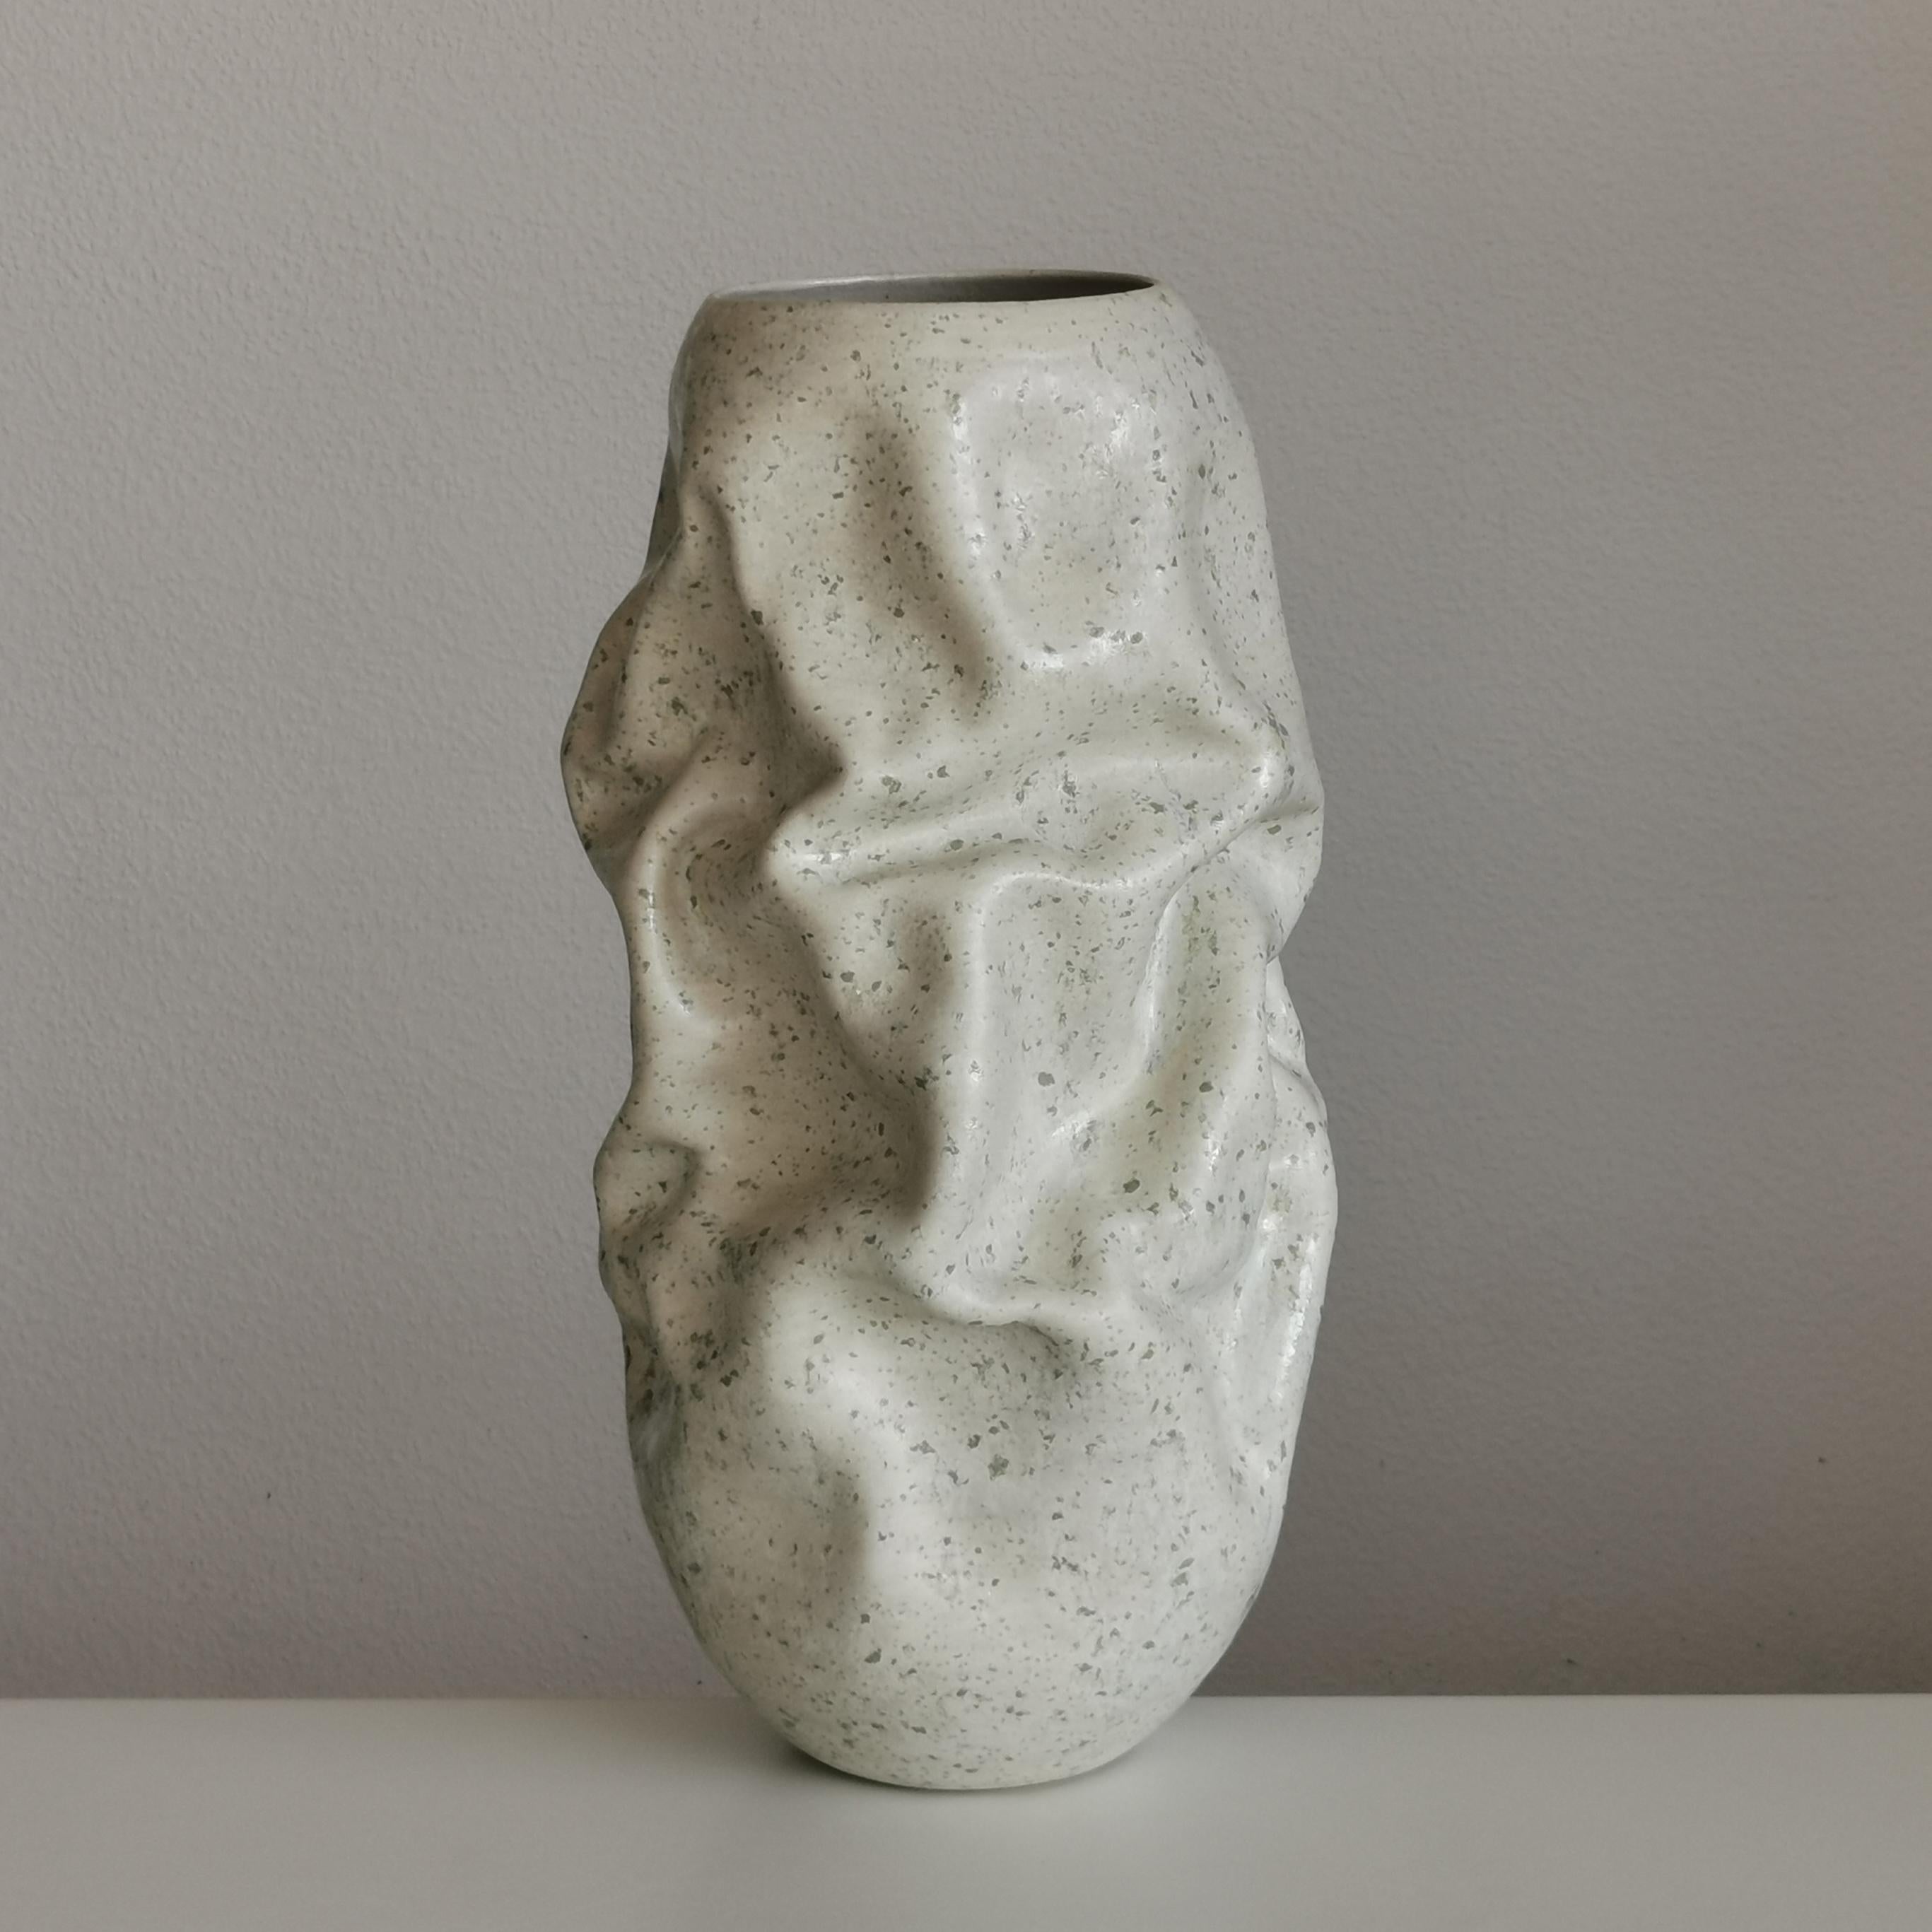 Spanish Medium White Crumpled Form, Green Chrystals, Vessel No.128, Ceramic Sculpture For Sale